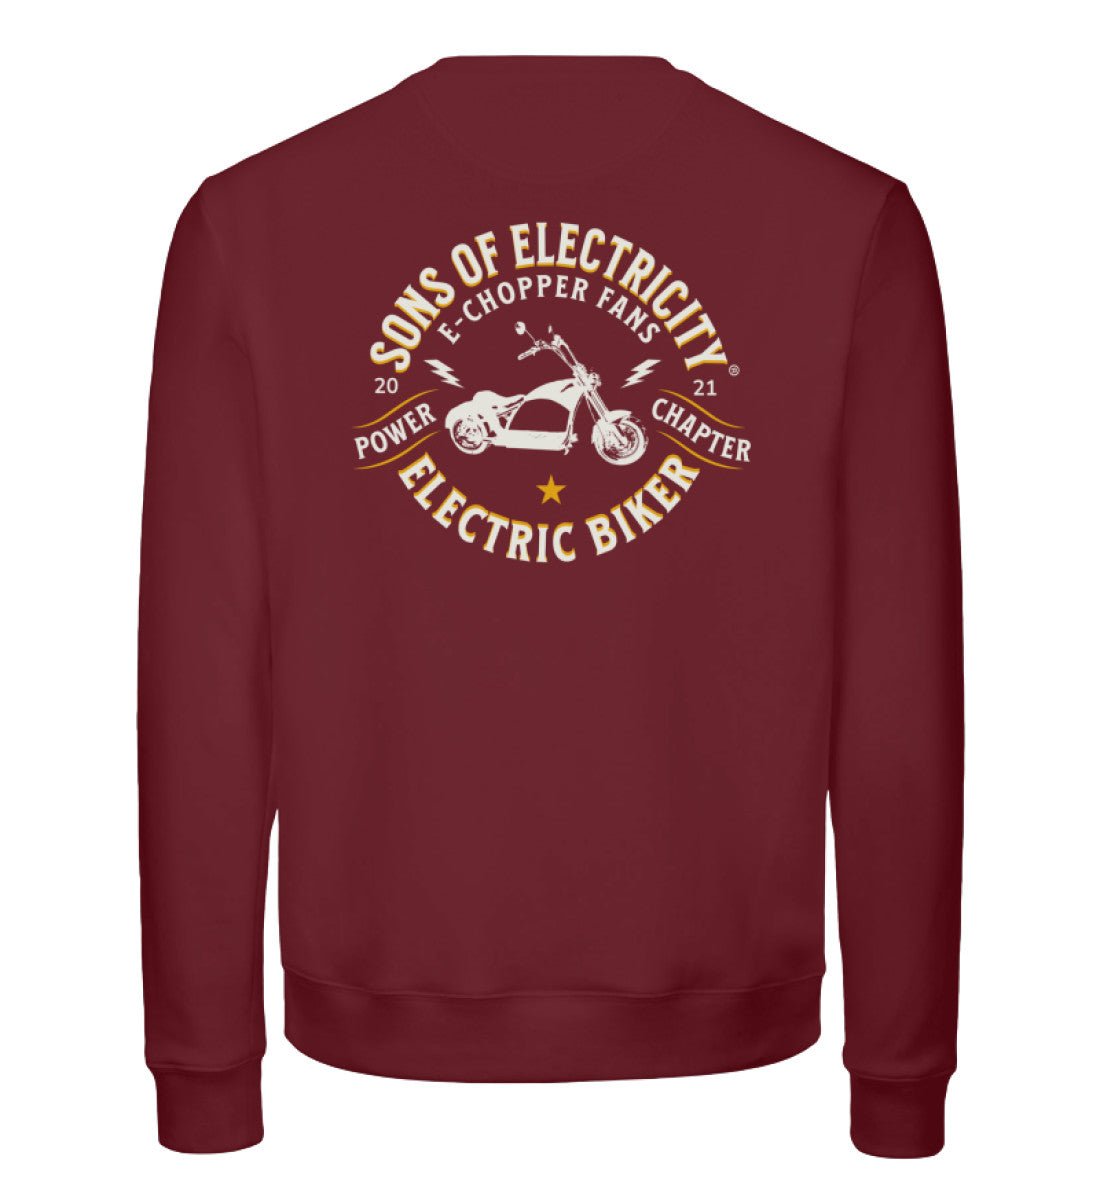 Bio Premium E-Chopper (1) Sweatshirt: SONS OF ELECTRICITY